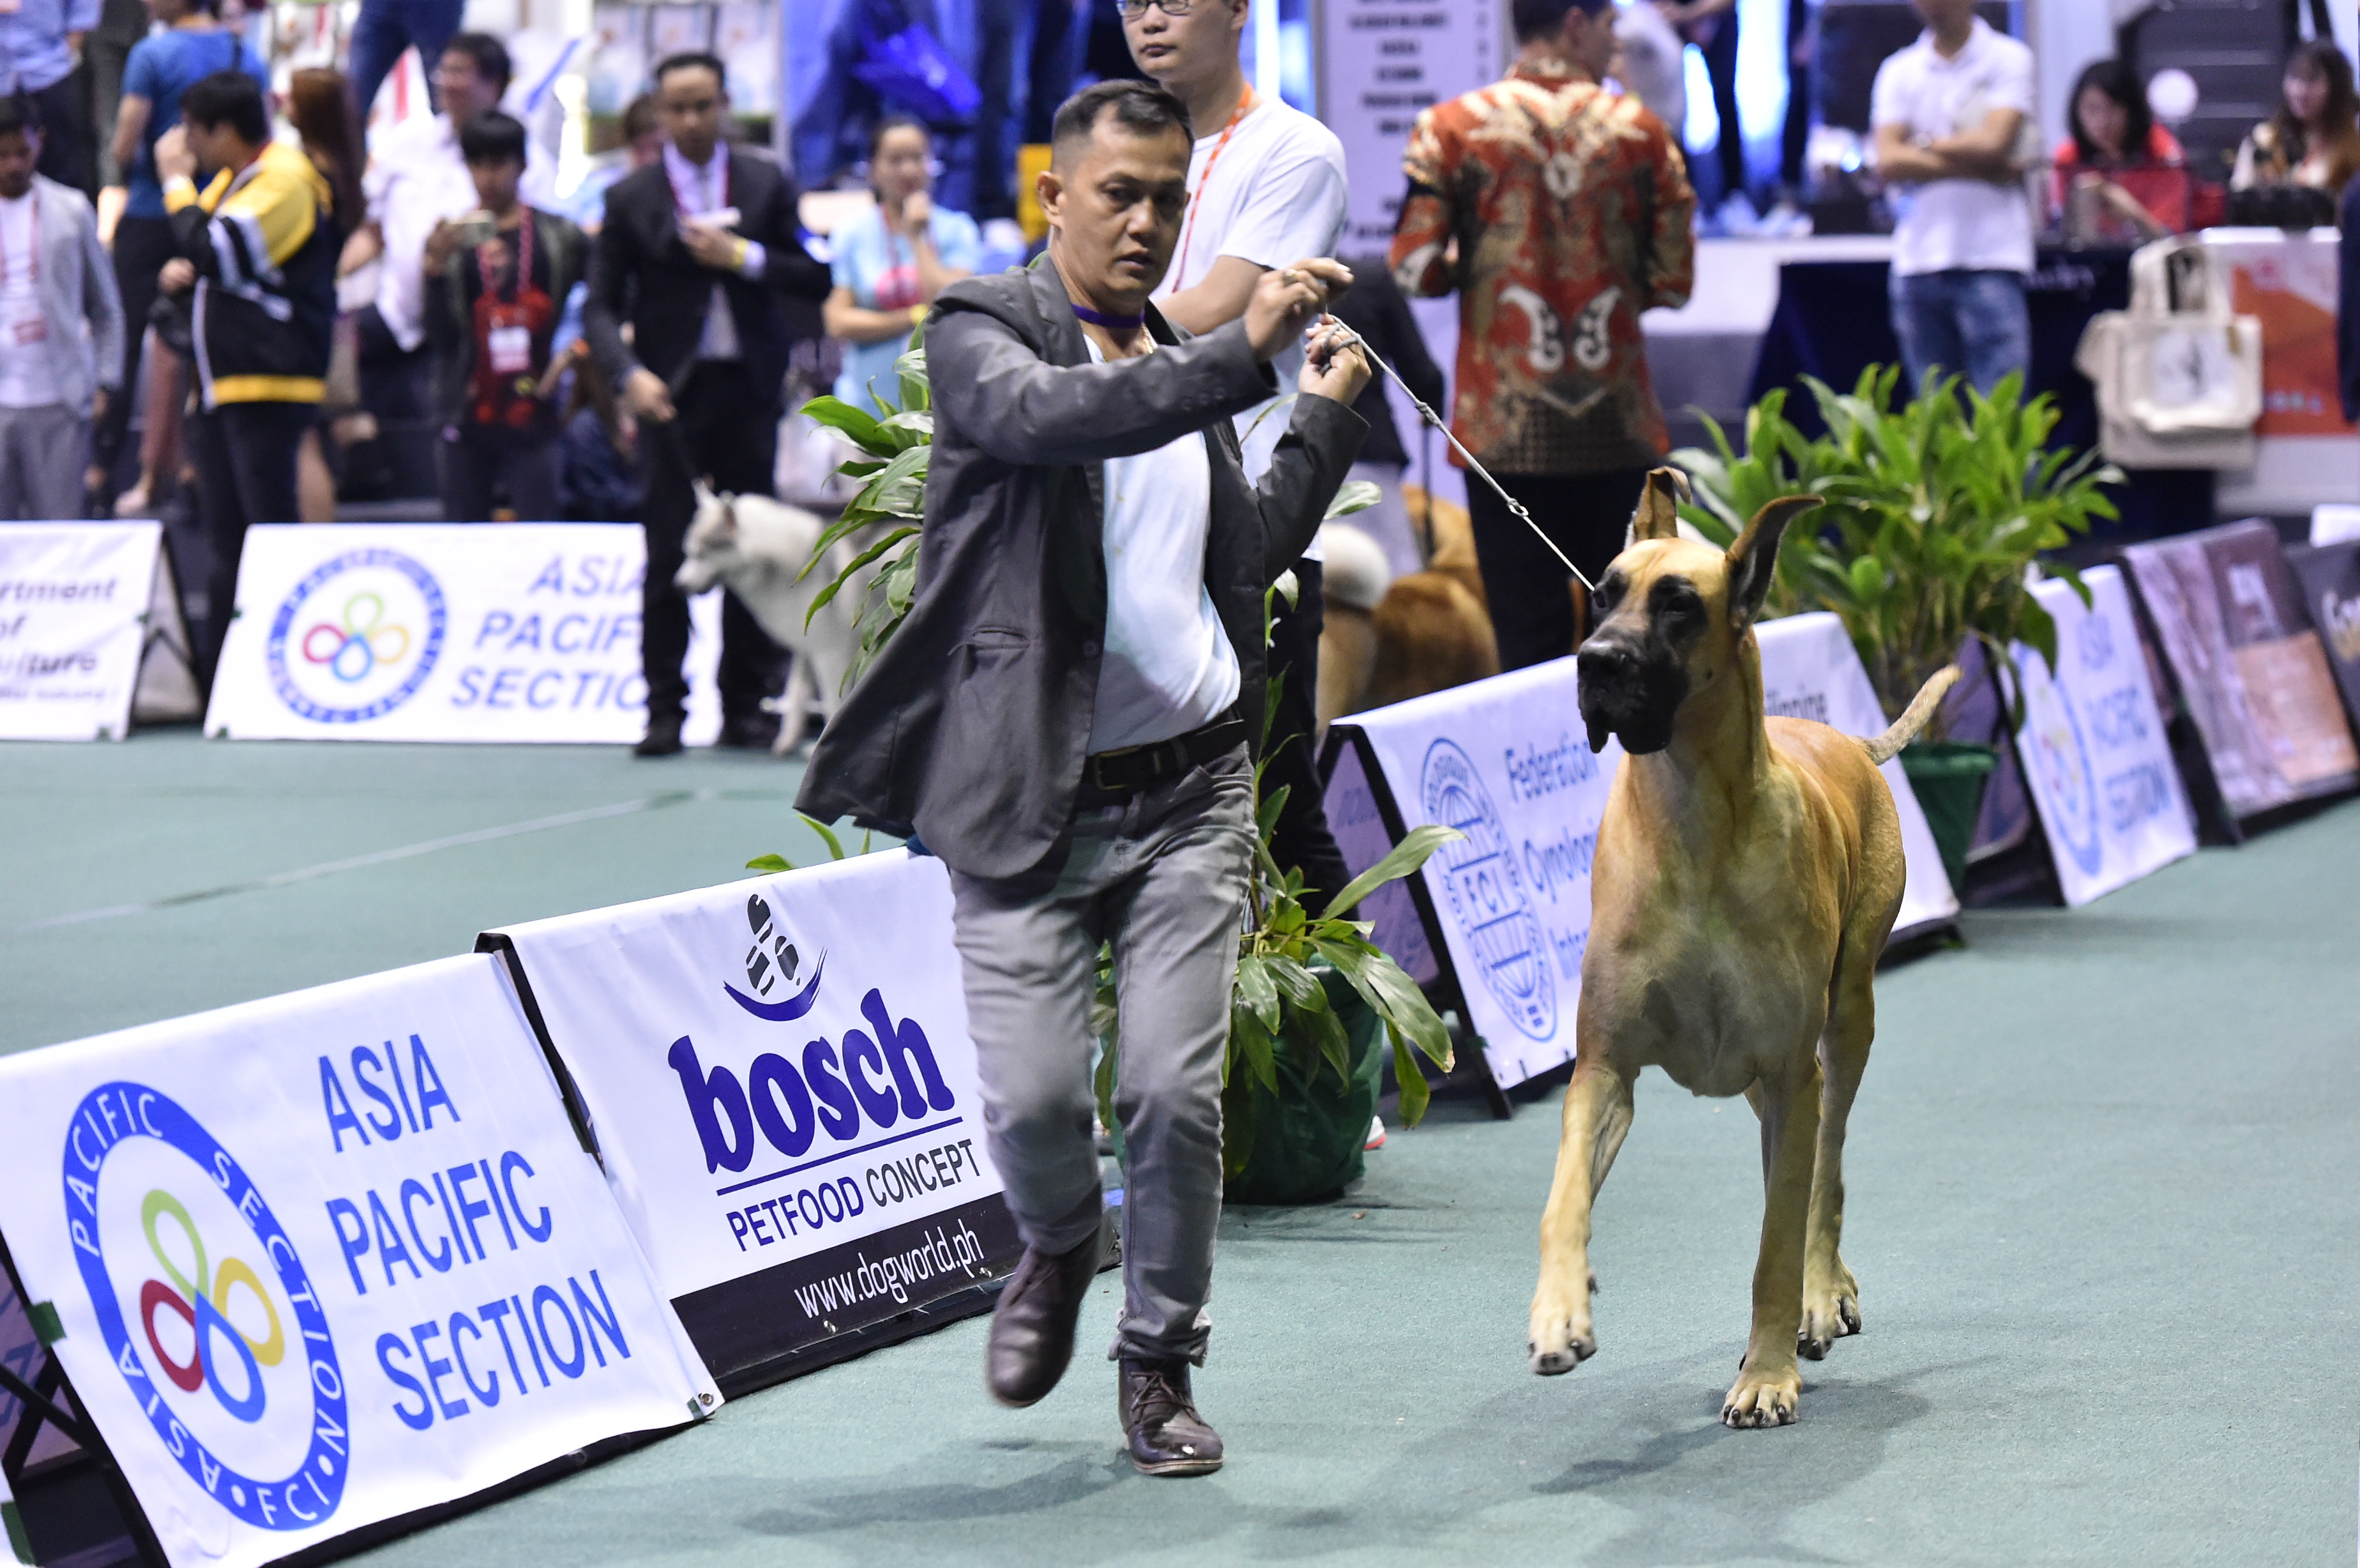 PCCI Philippine Circuit 2019 holds successful ‘Asia’s Biggest Dog Show’